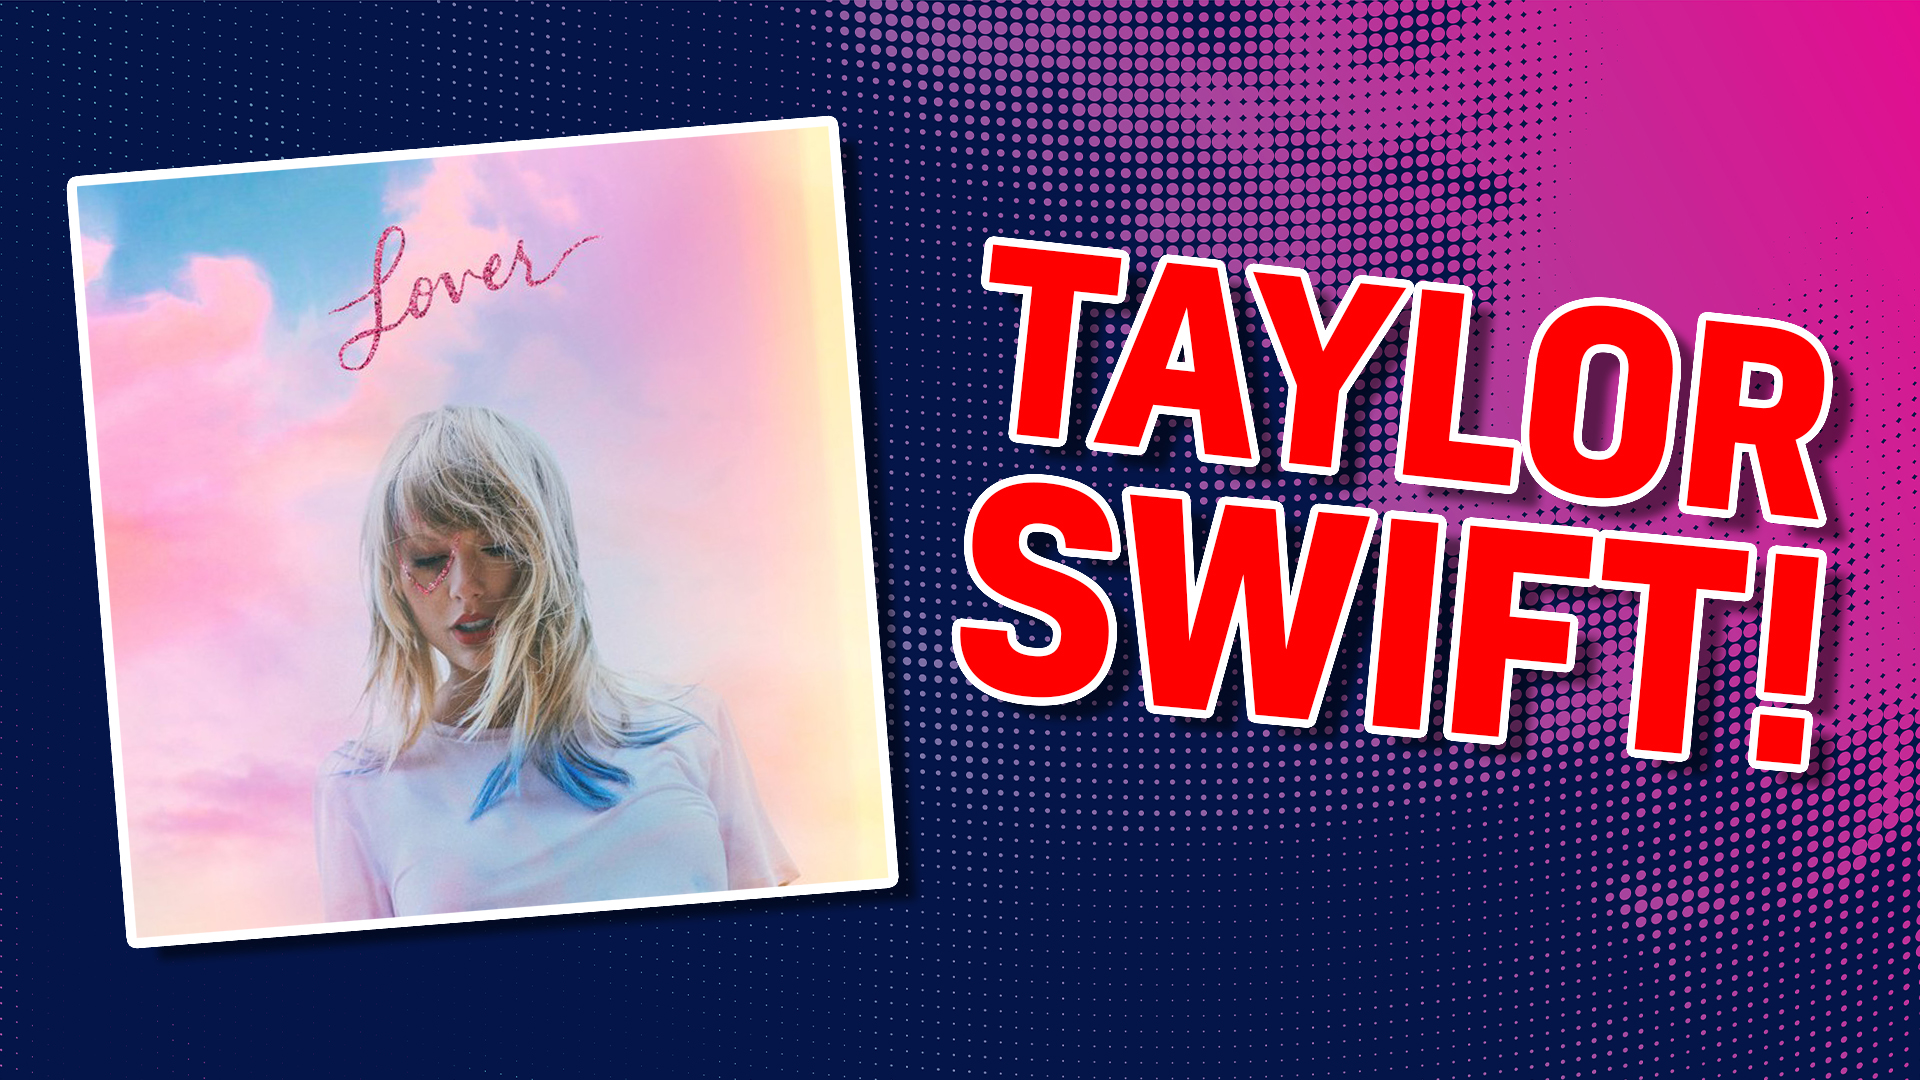 Taylor Swift's album Lover